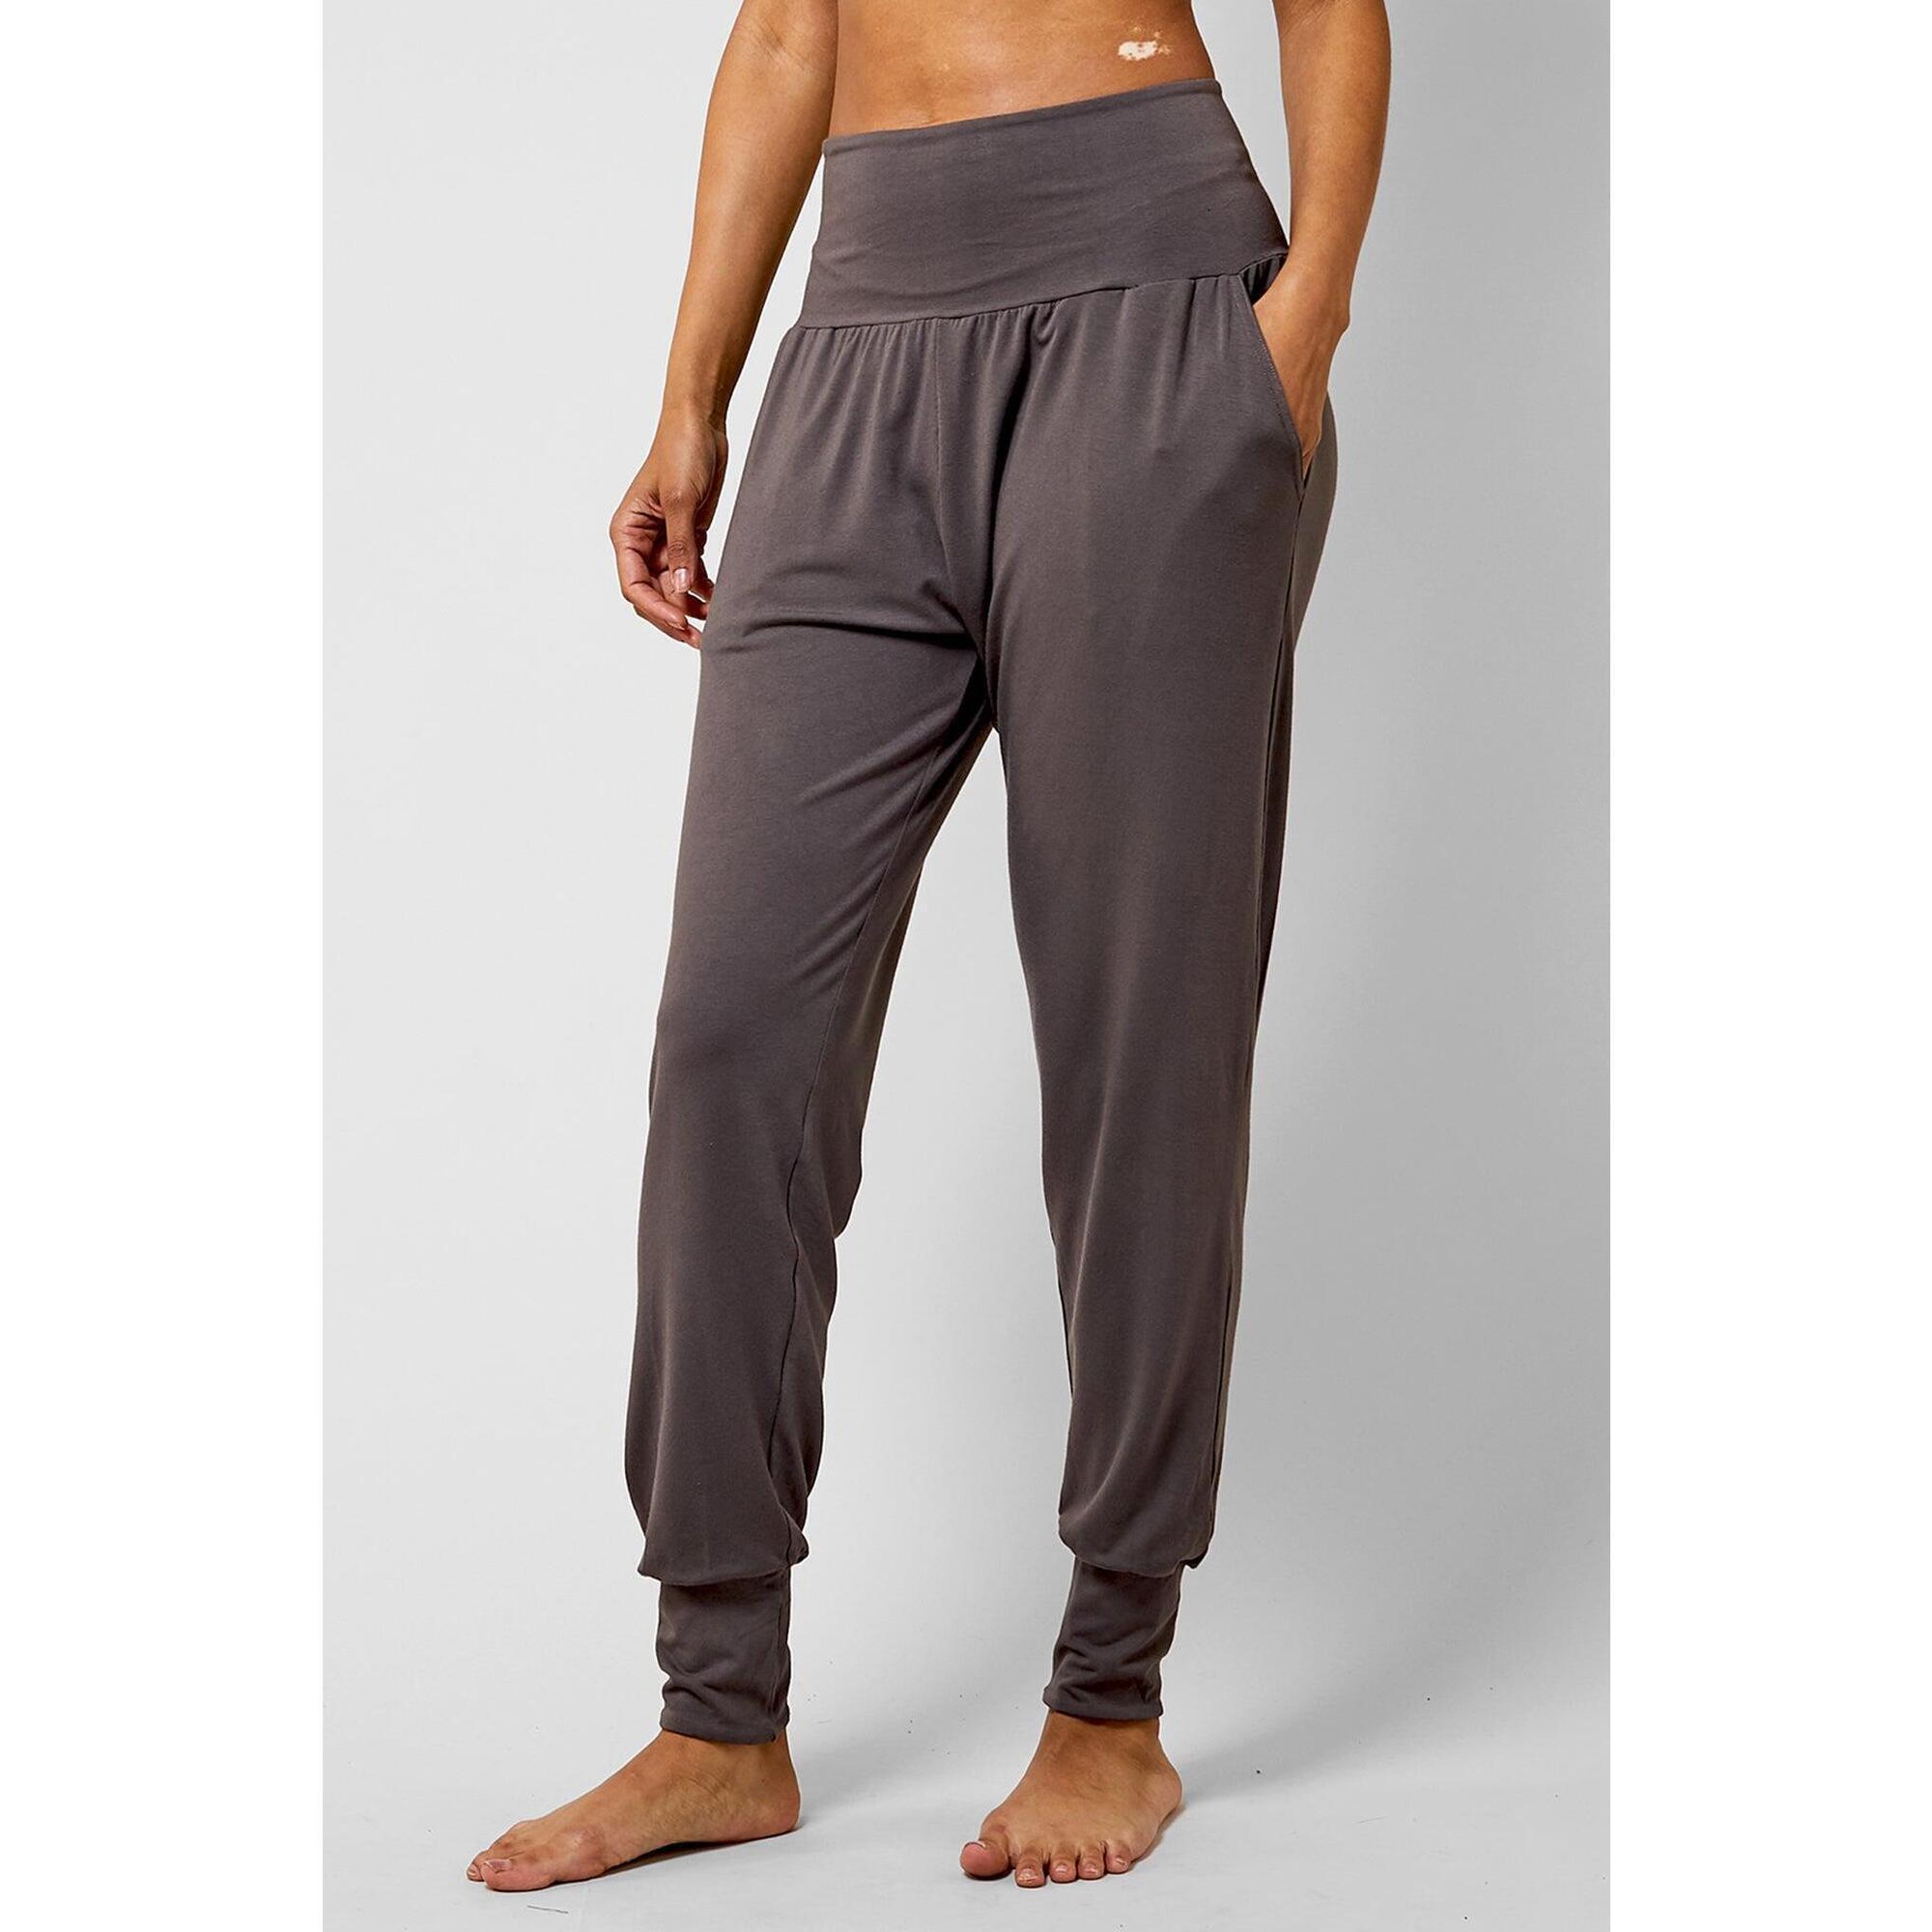 TLC SPORT Lightweight Yoga Loose Side Pockets Cuffed Pant Mink